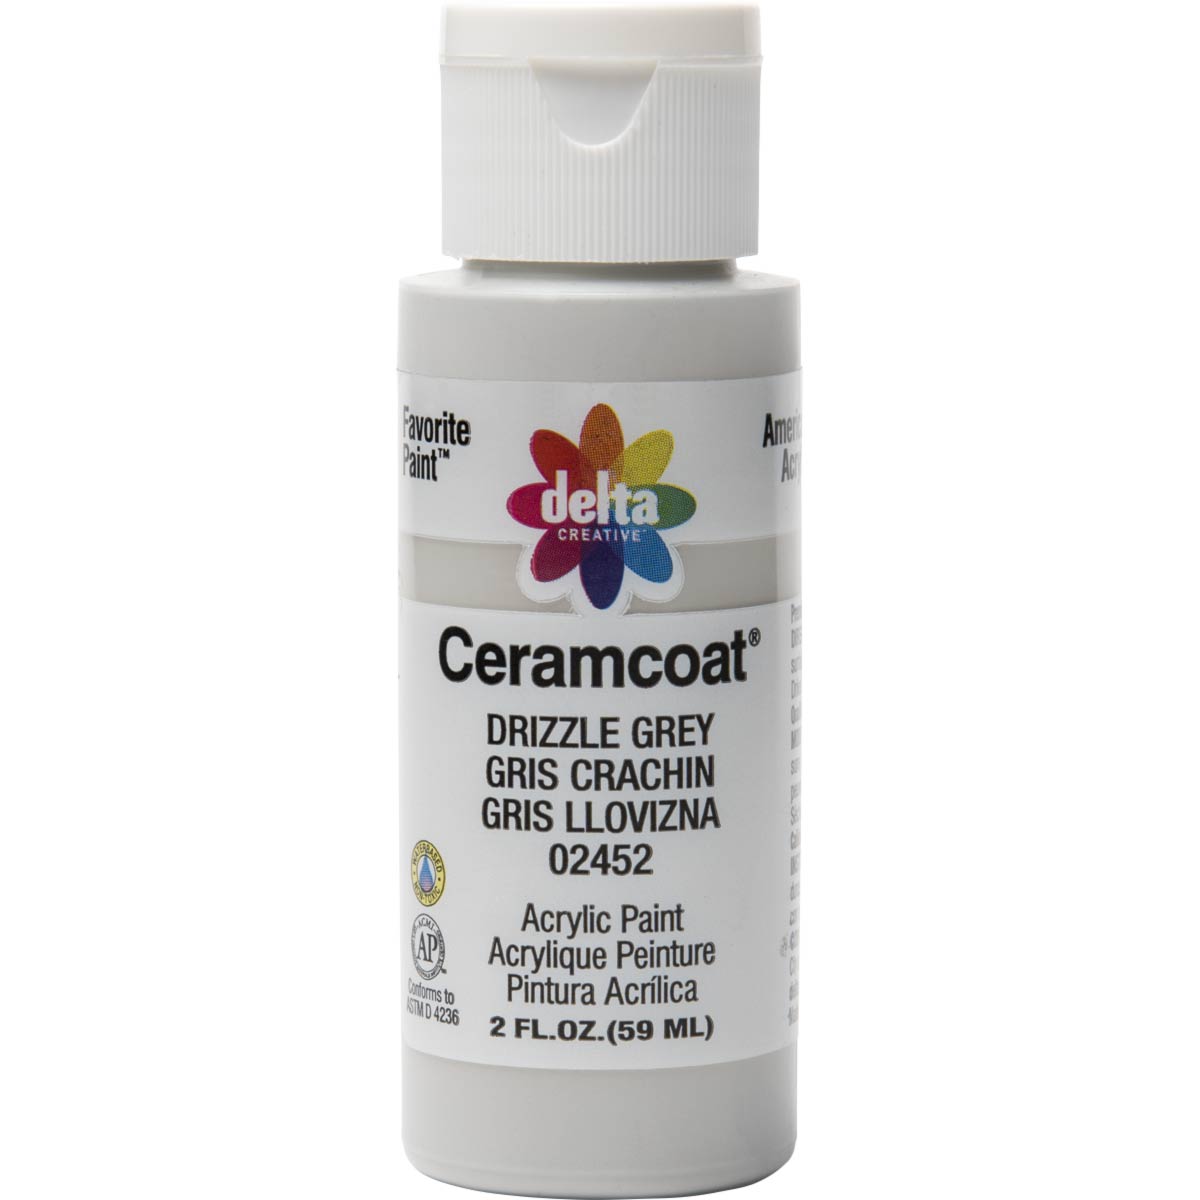 Delta Ceramcoat Acrylic Paint - Drizzle Grey, 2 oz. - 024520202W